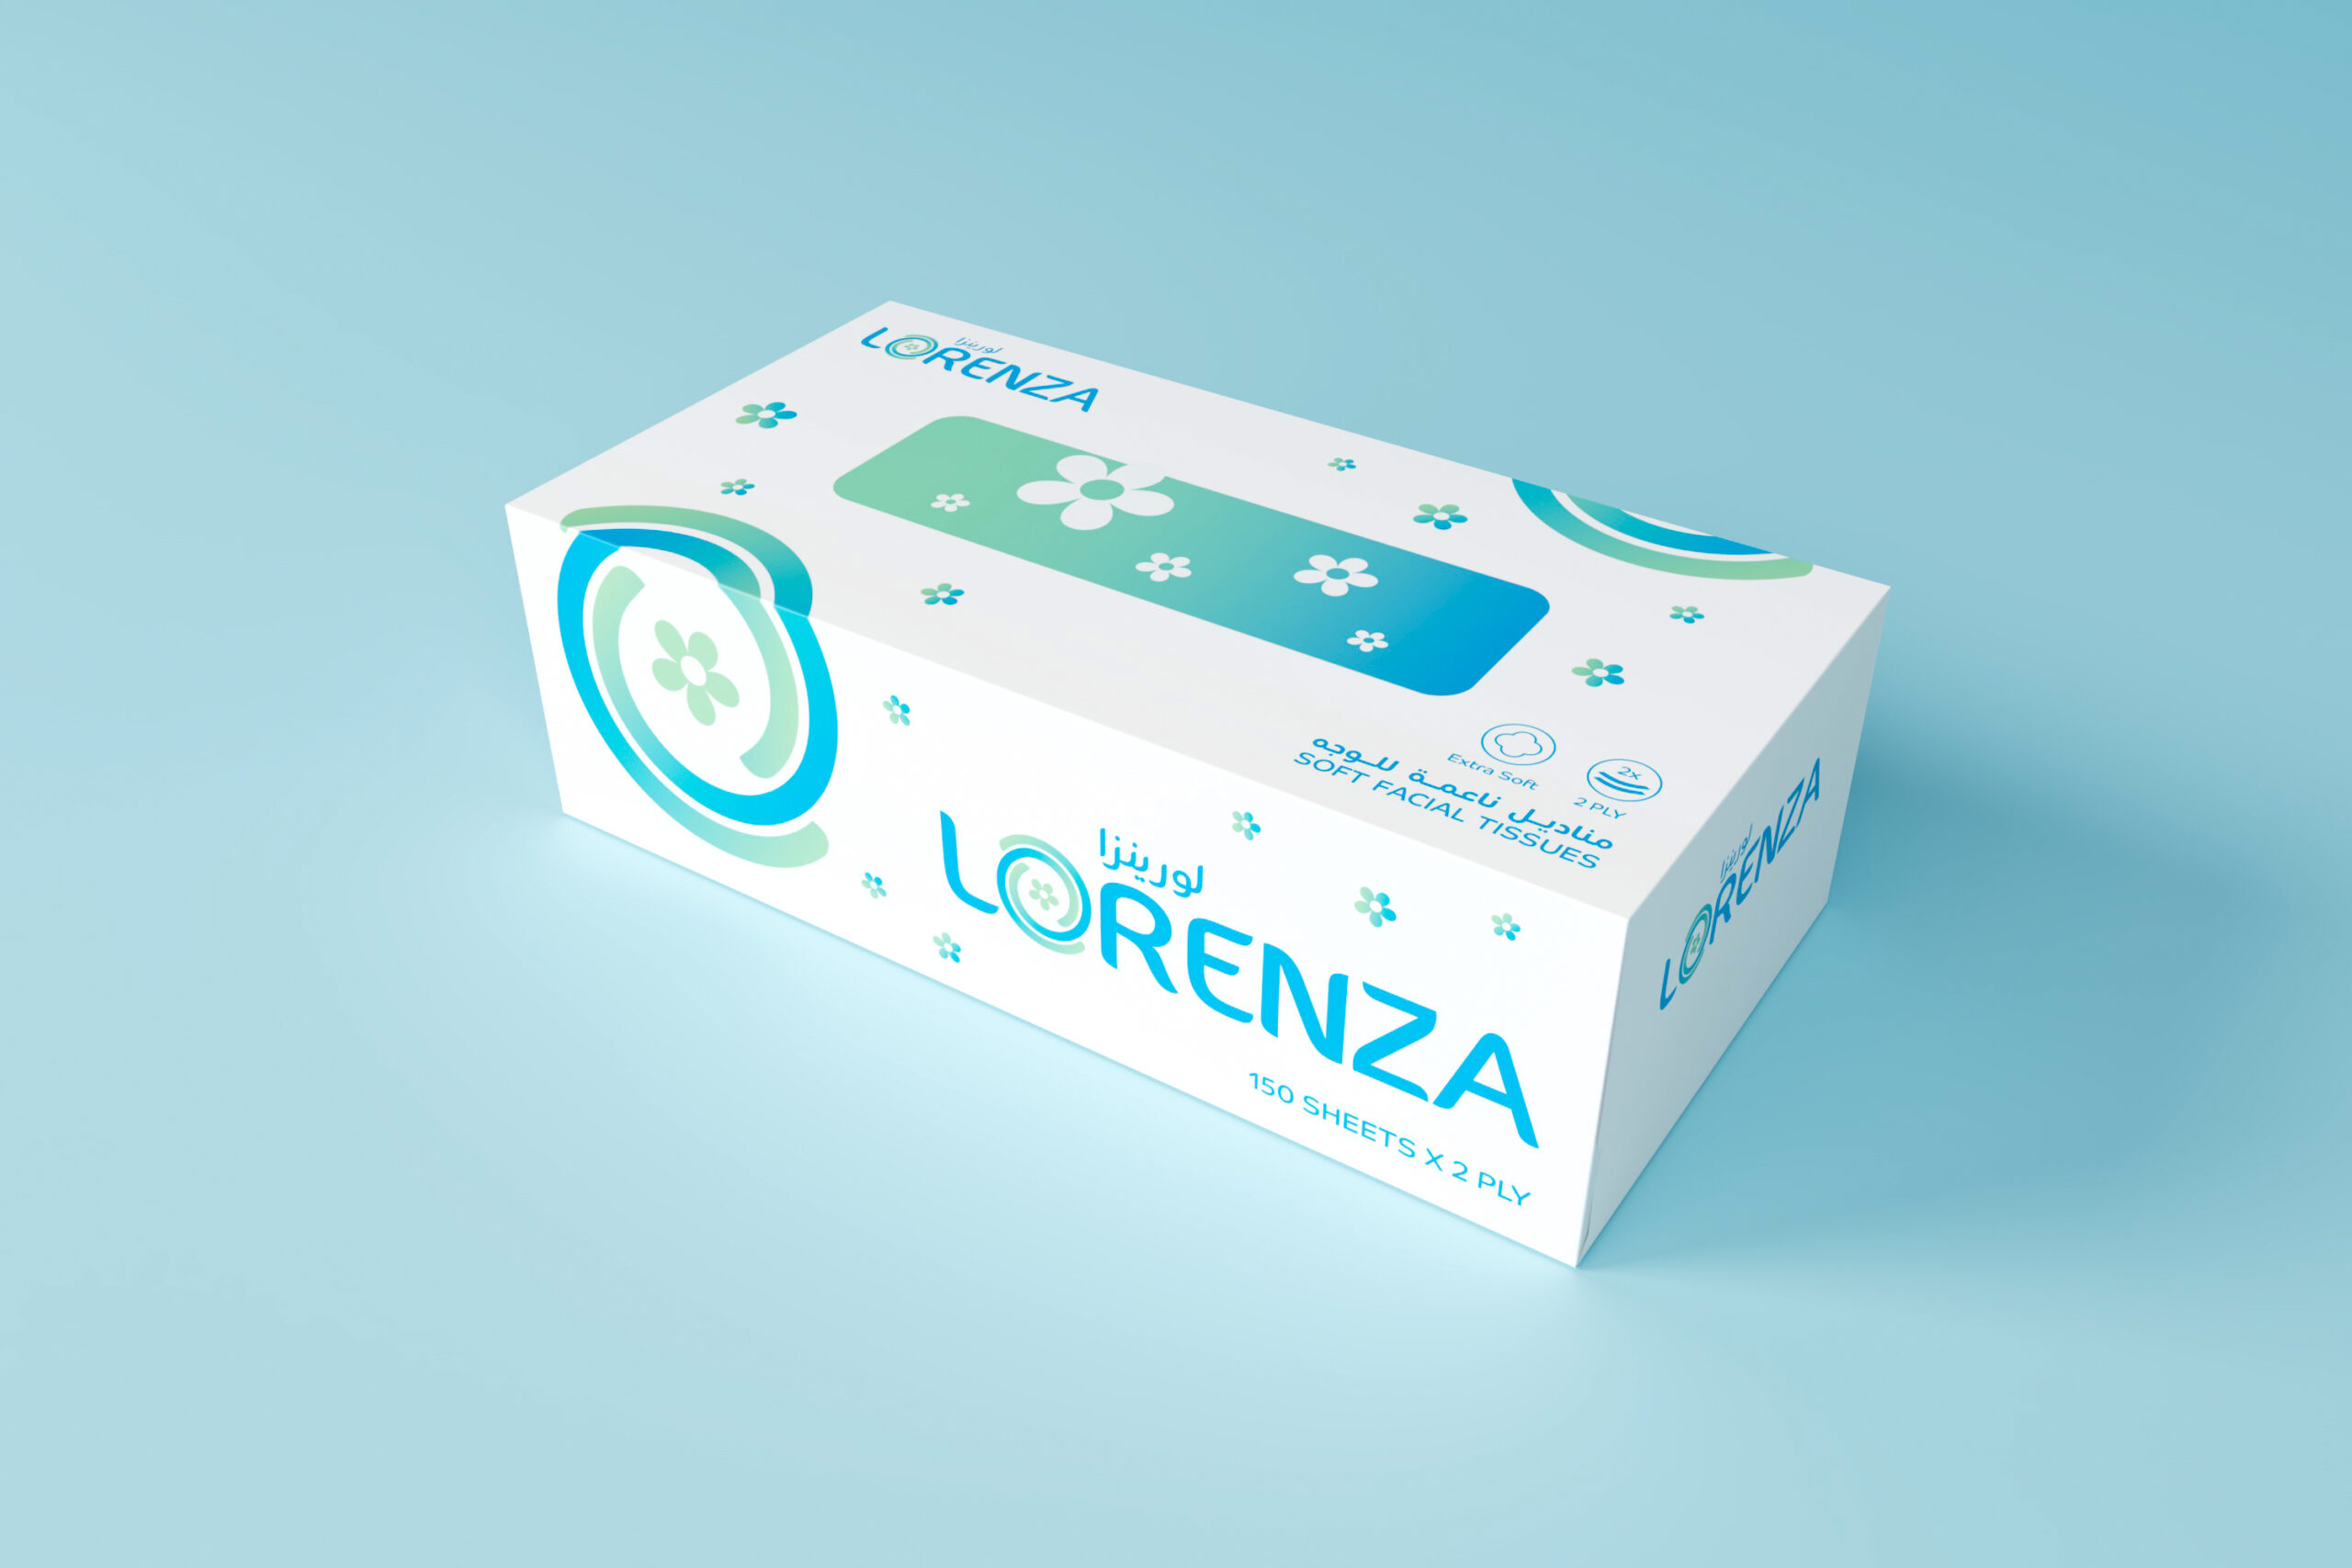 Lorenza Facial Tissue Box Sheet Size 19x19cm Number PLY 2 SKU 150 Sheet